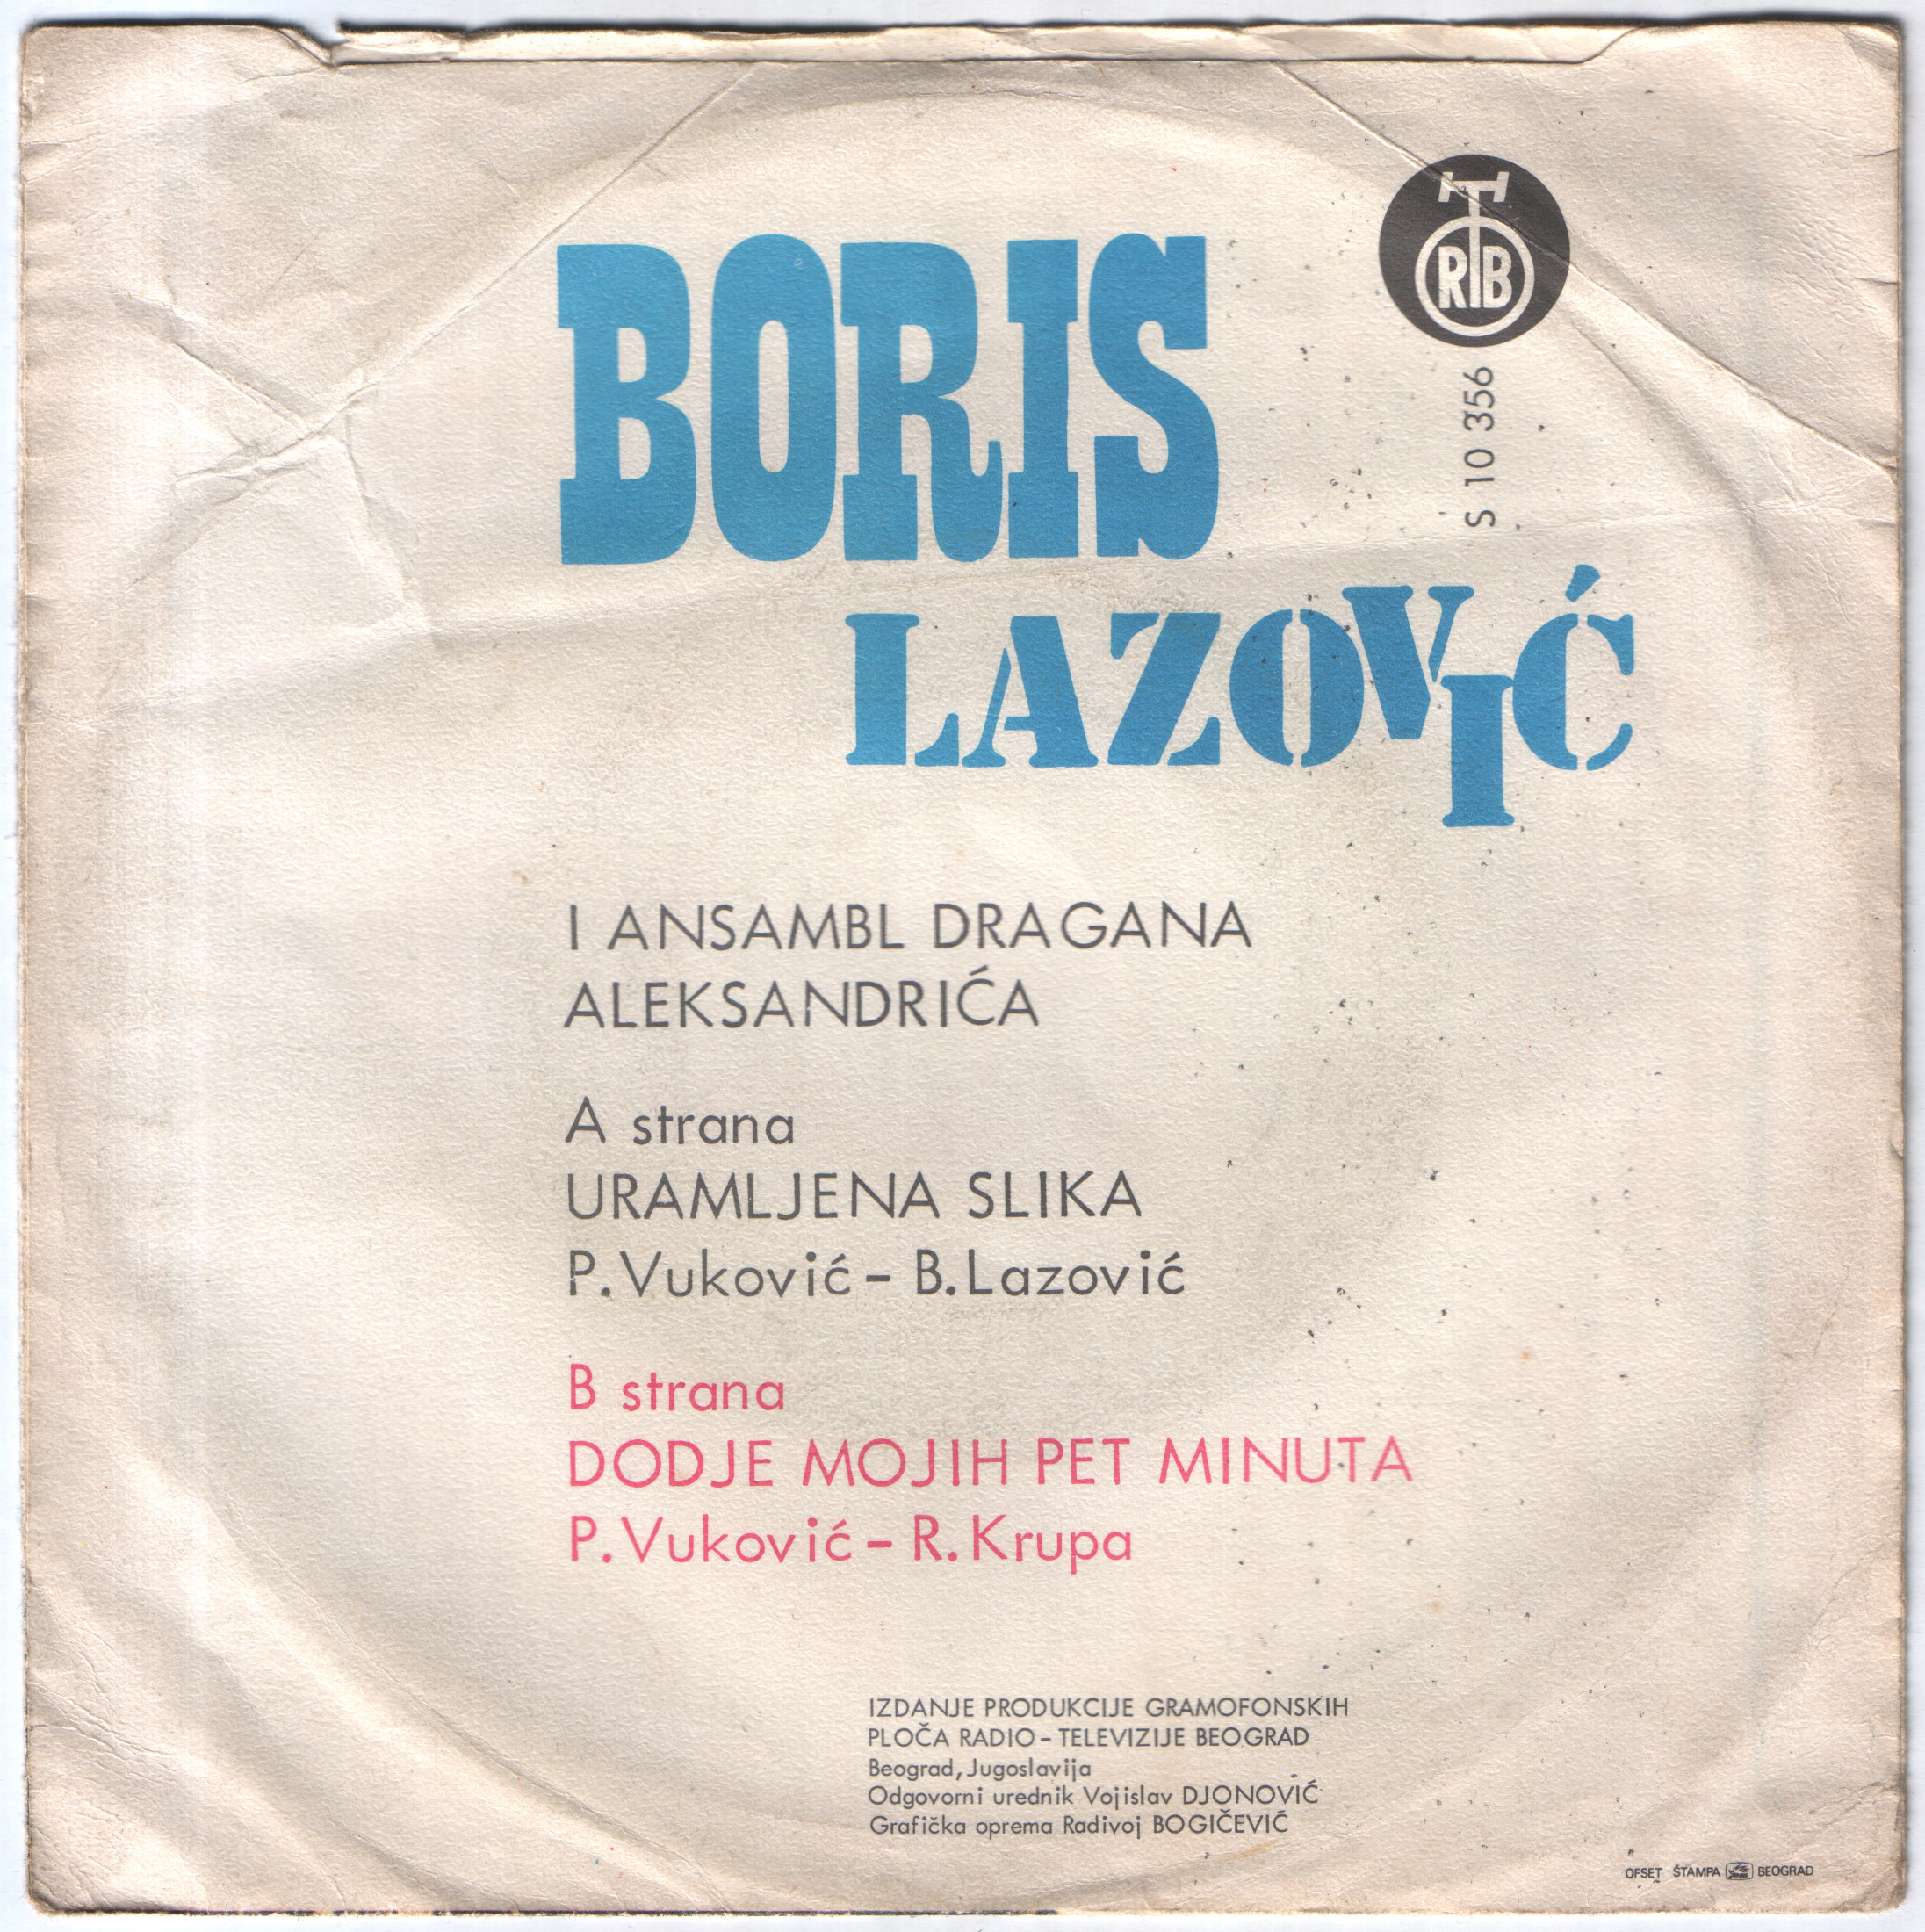 Boris Lazovic 1975 Z